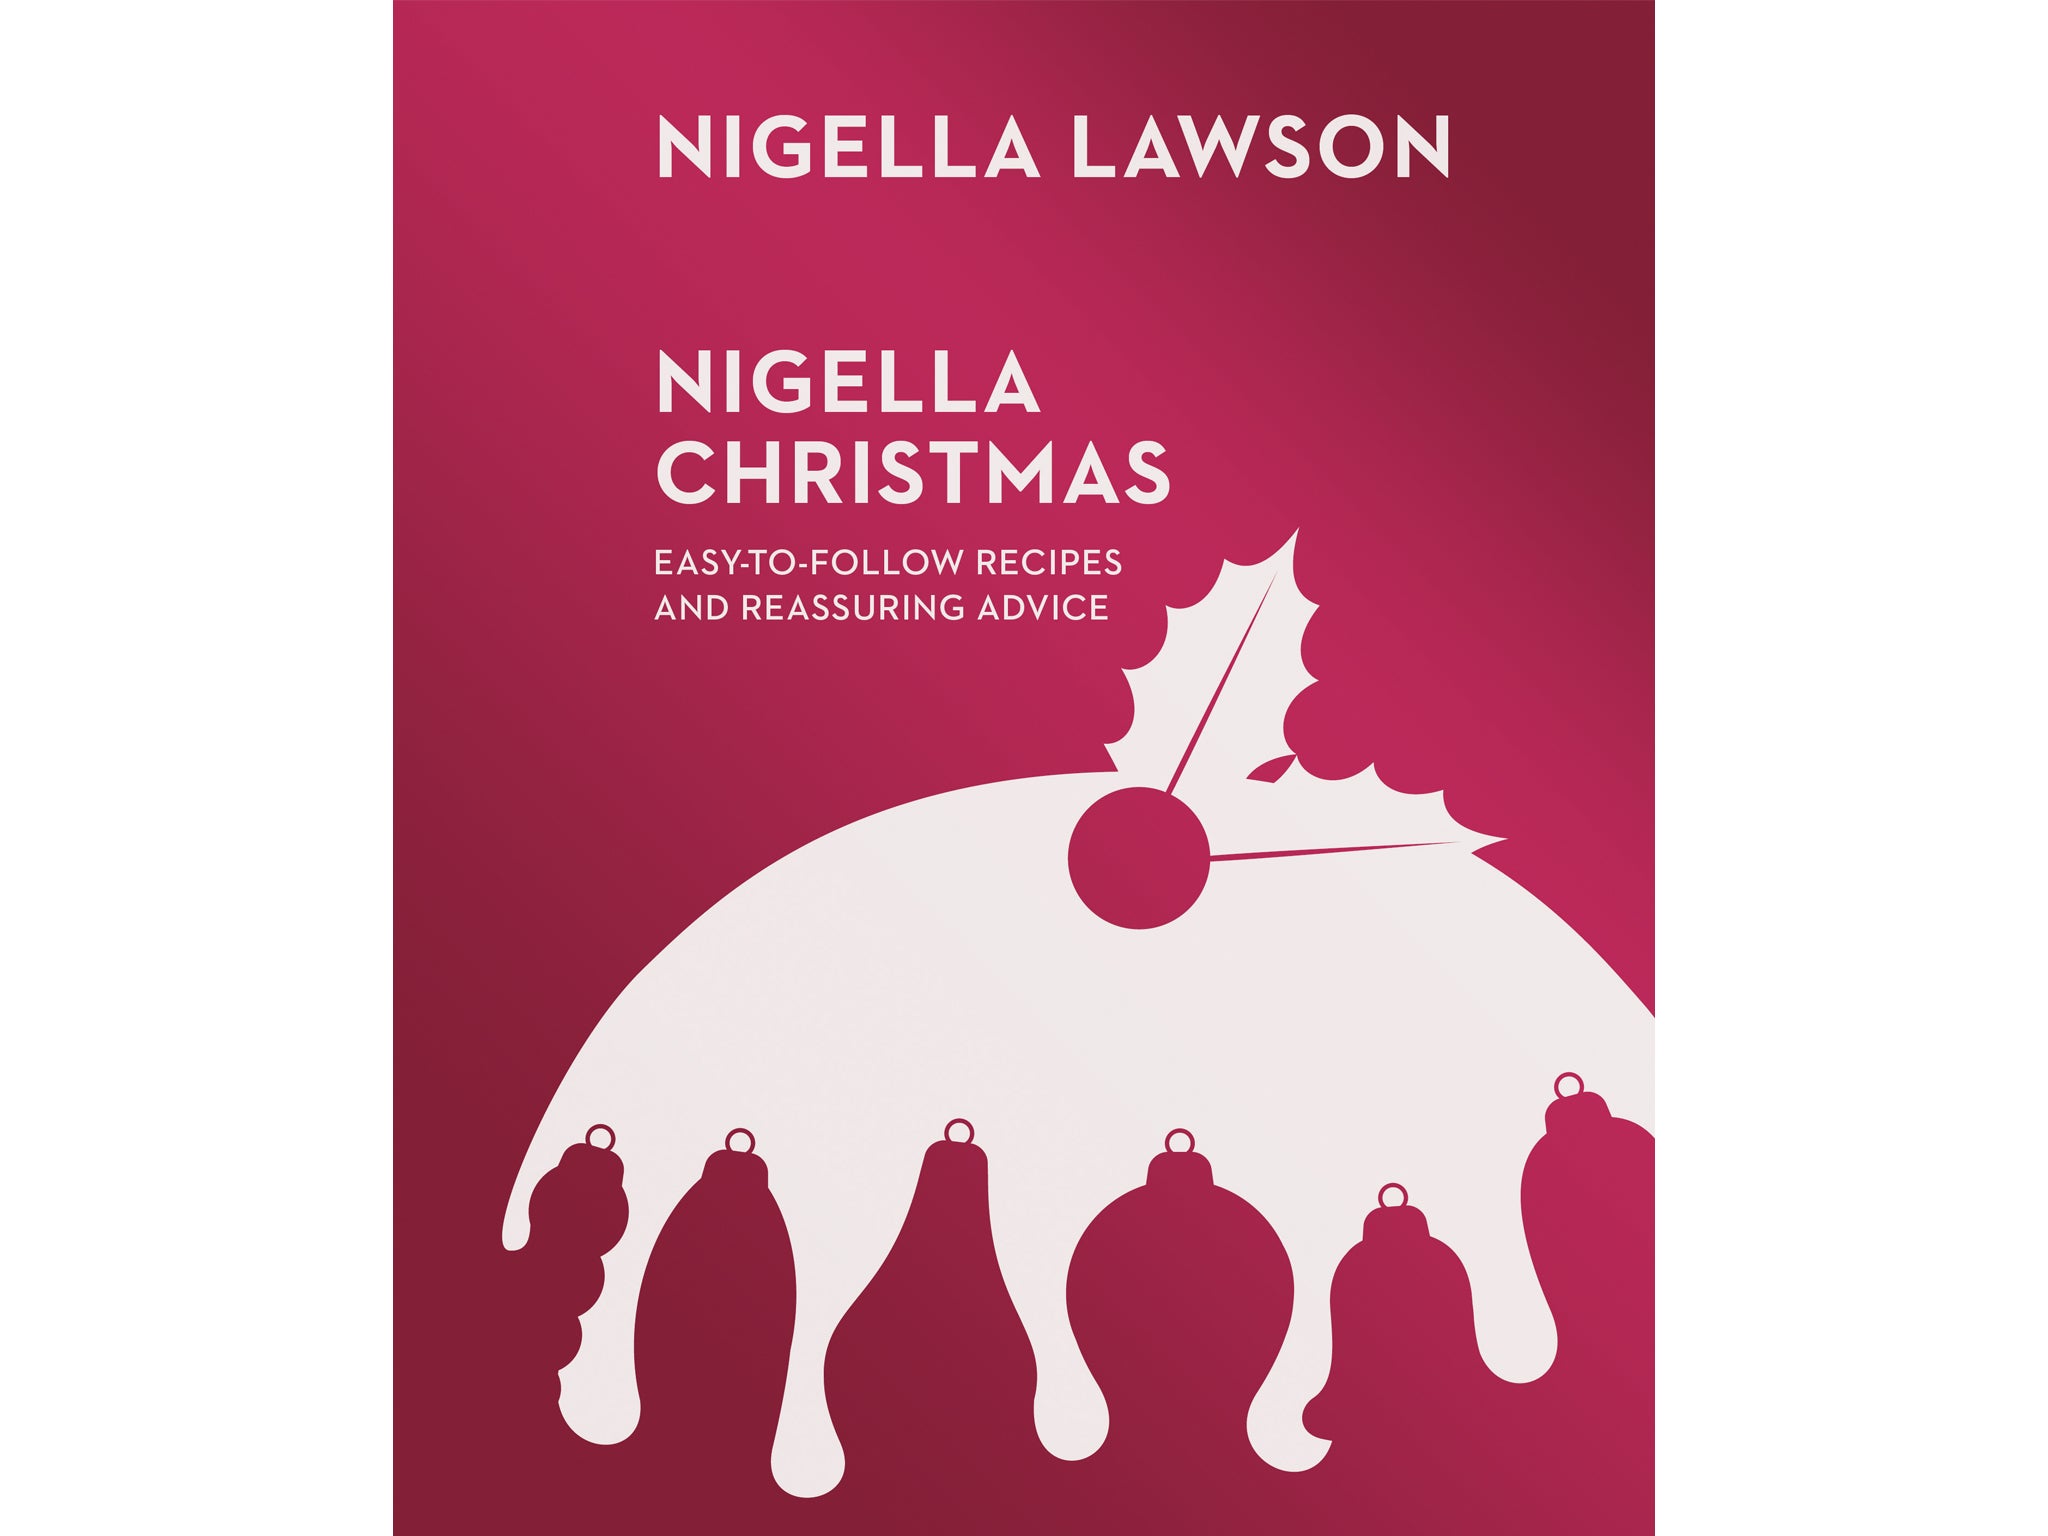 Nigella Christmas - Nigella Lawson recipe books.jpg